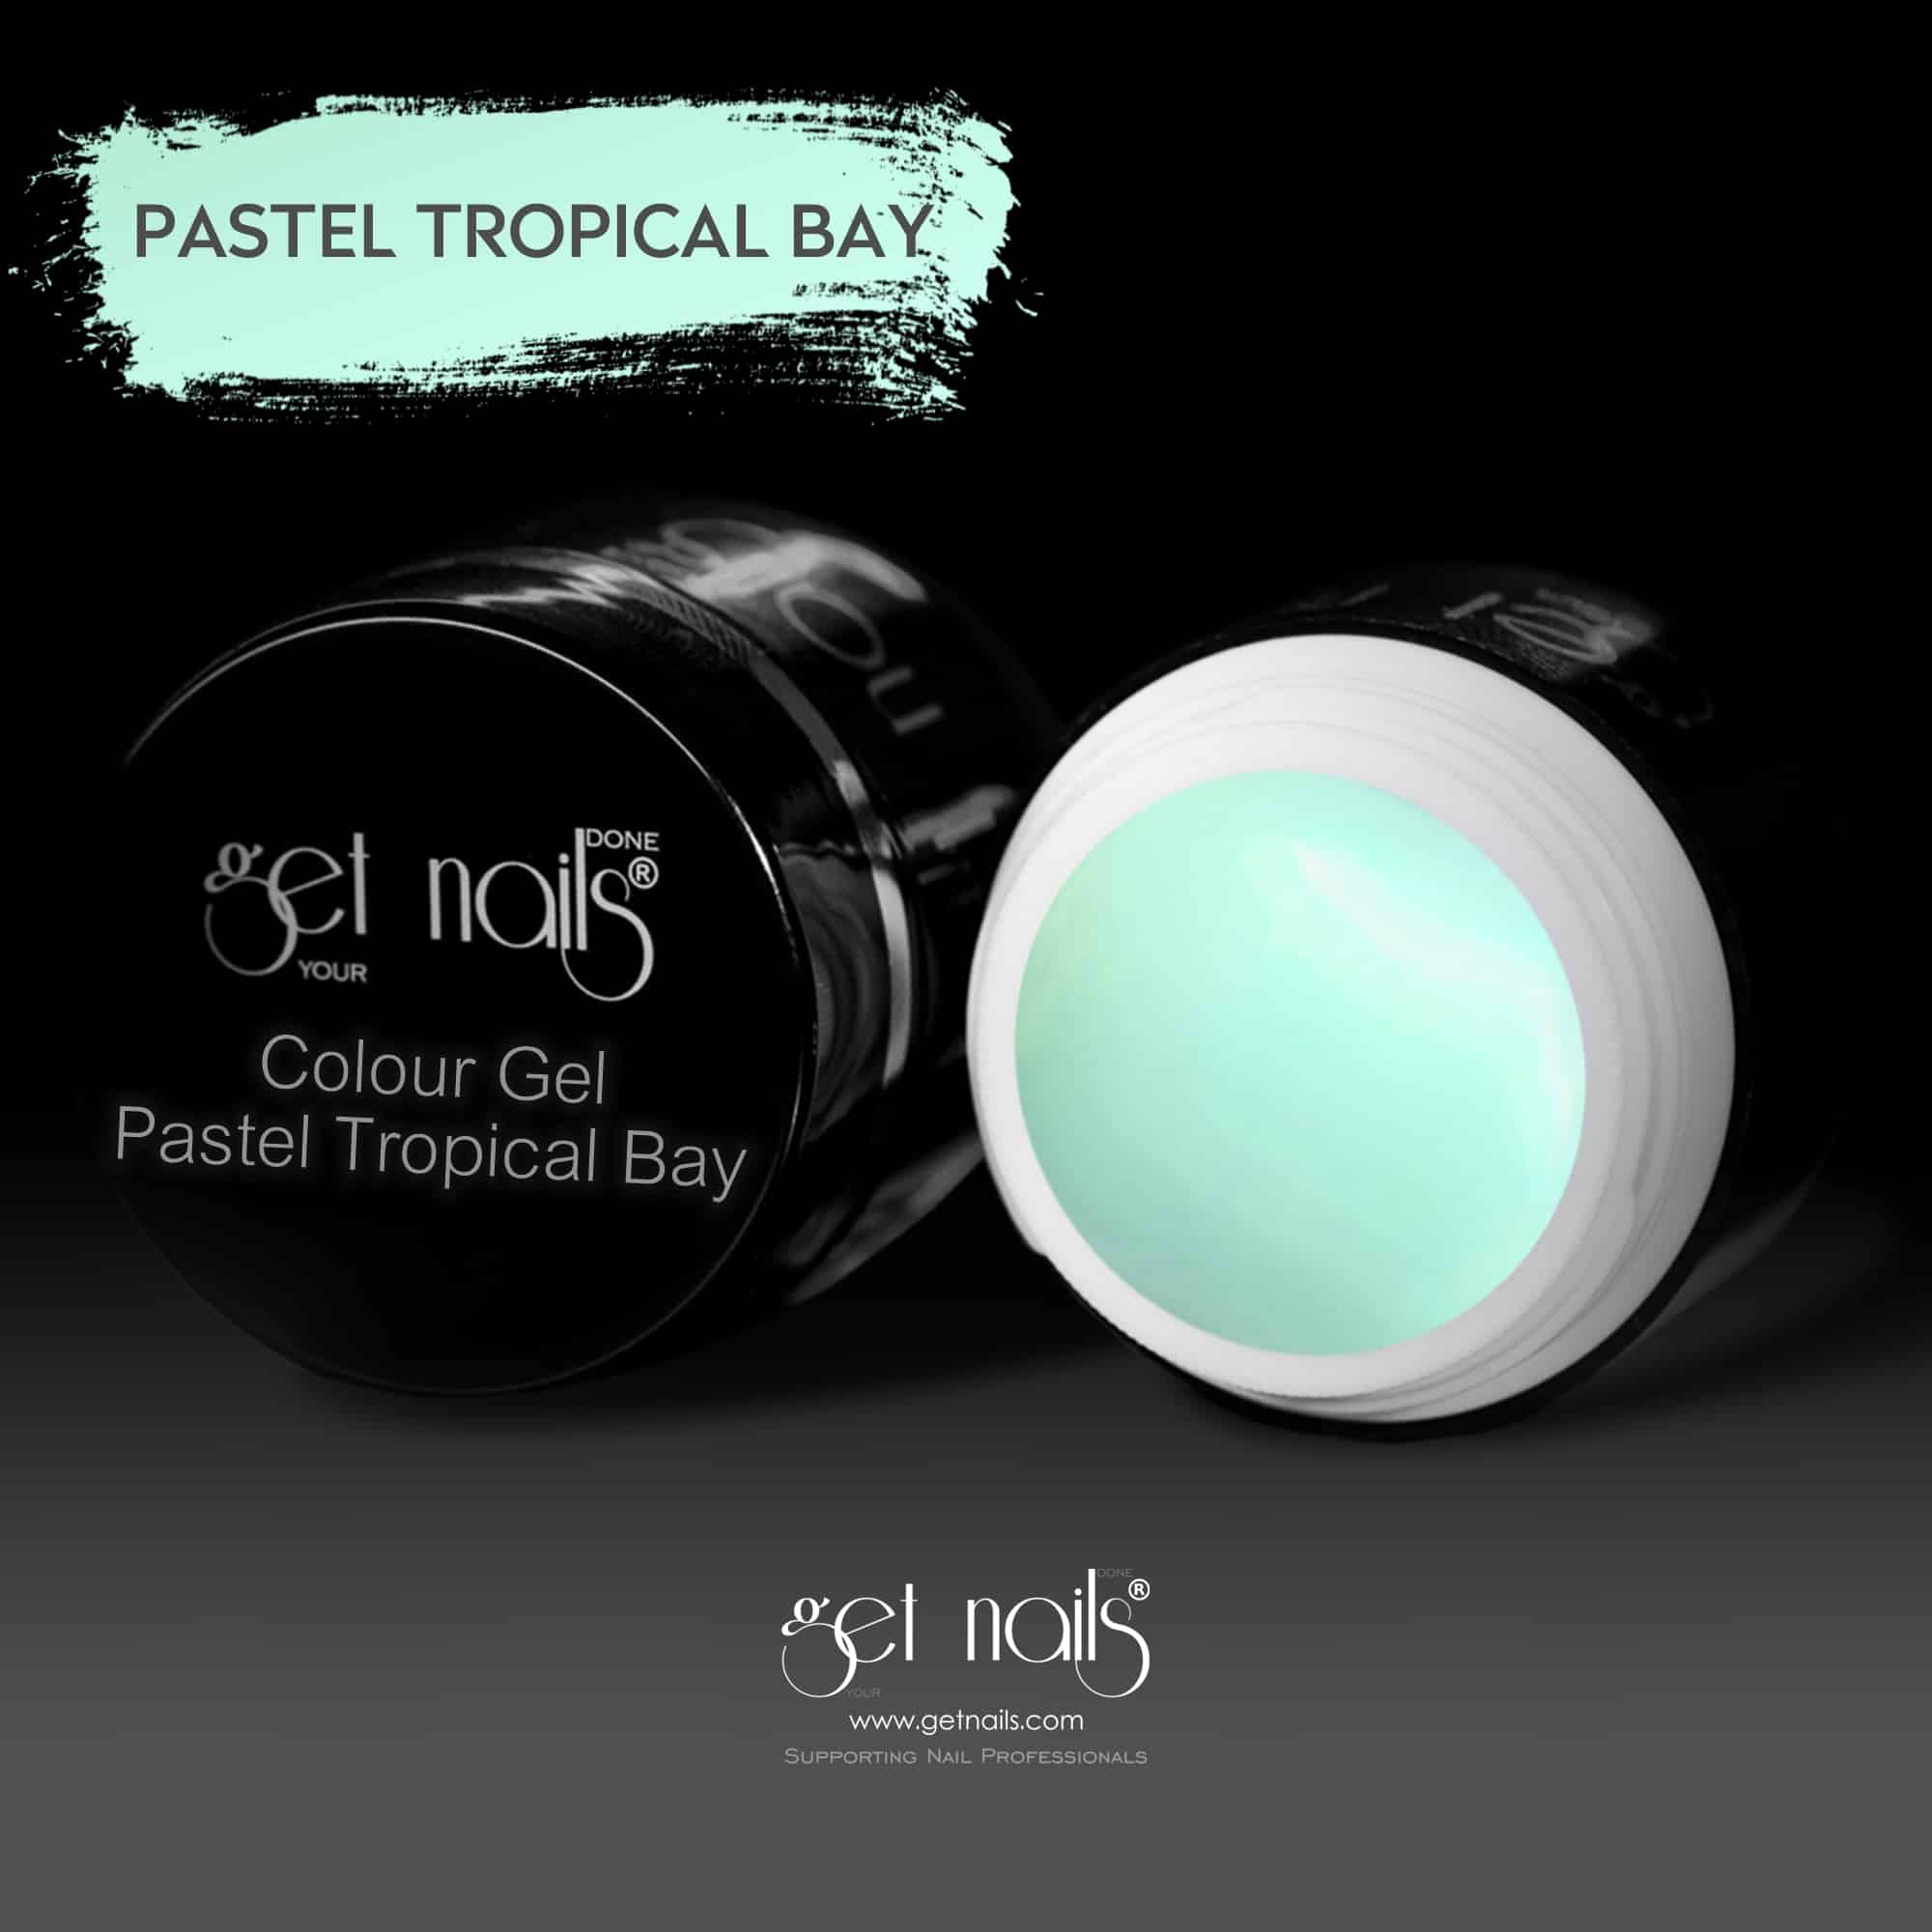 Get Nails Austria - Color Gel Pastel Tropical Bay 5g